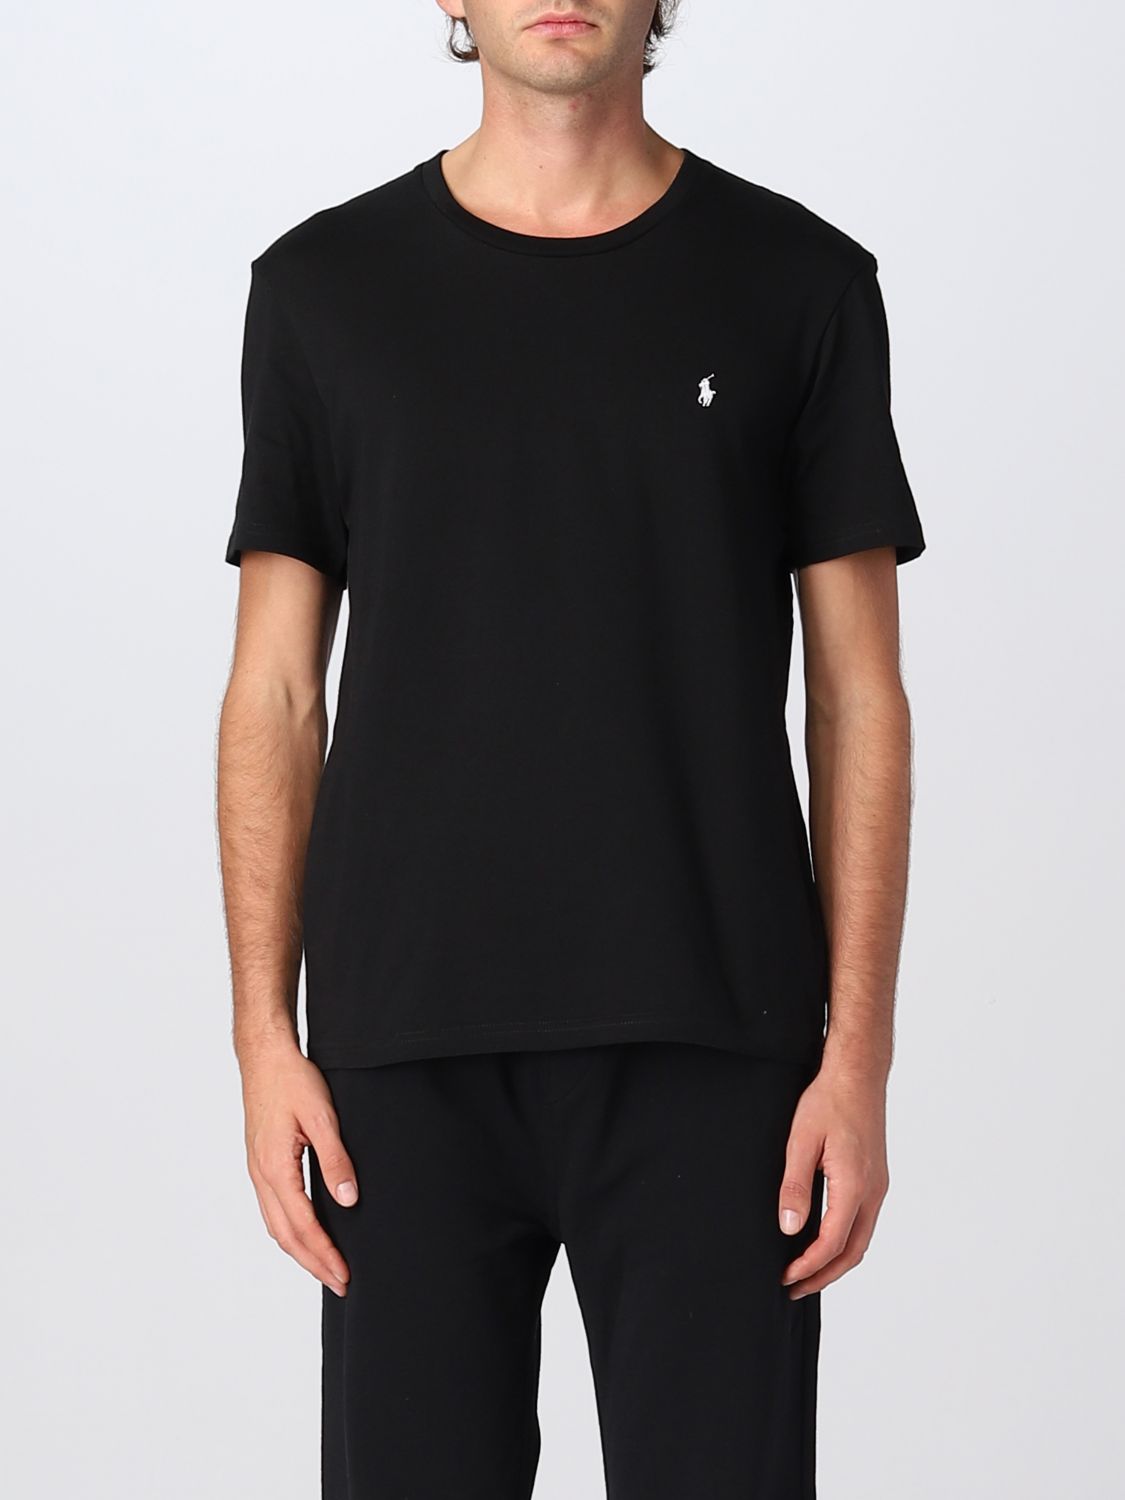 POLO RALPH LAUREN: t-shirt for man - Black | Polo Ralph Lauren t-shirt  714844756 online on 